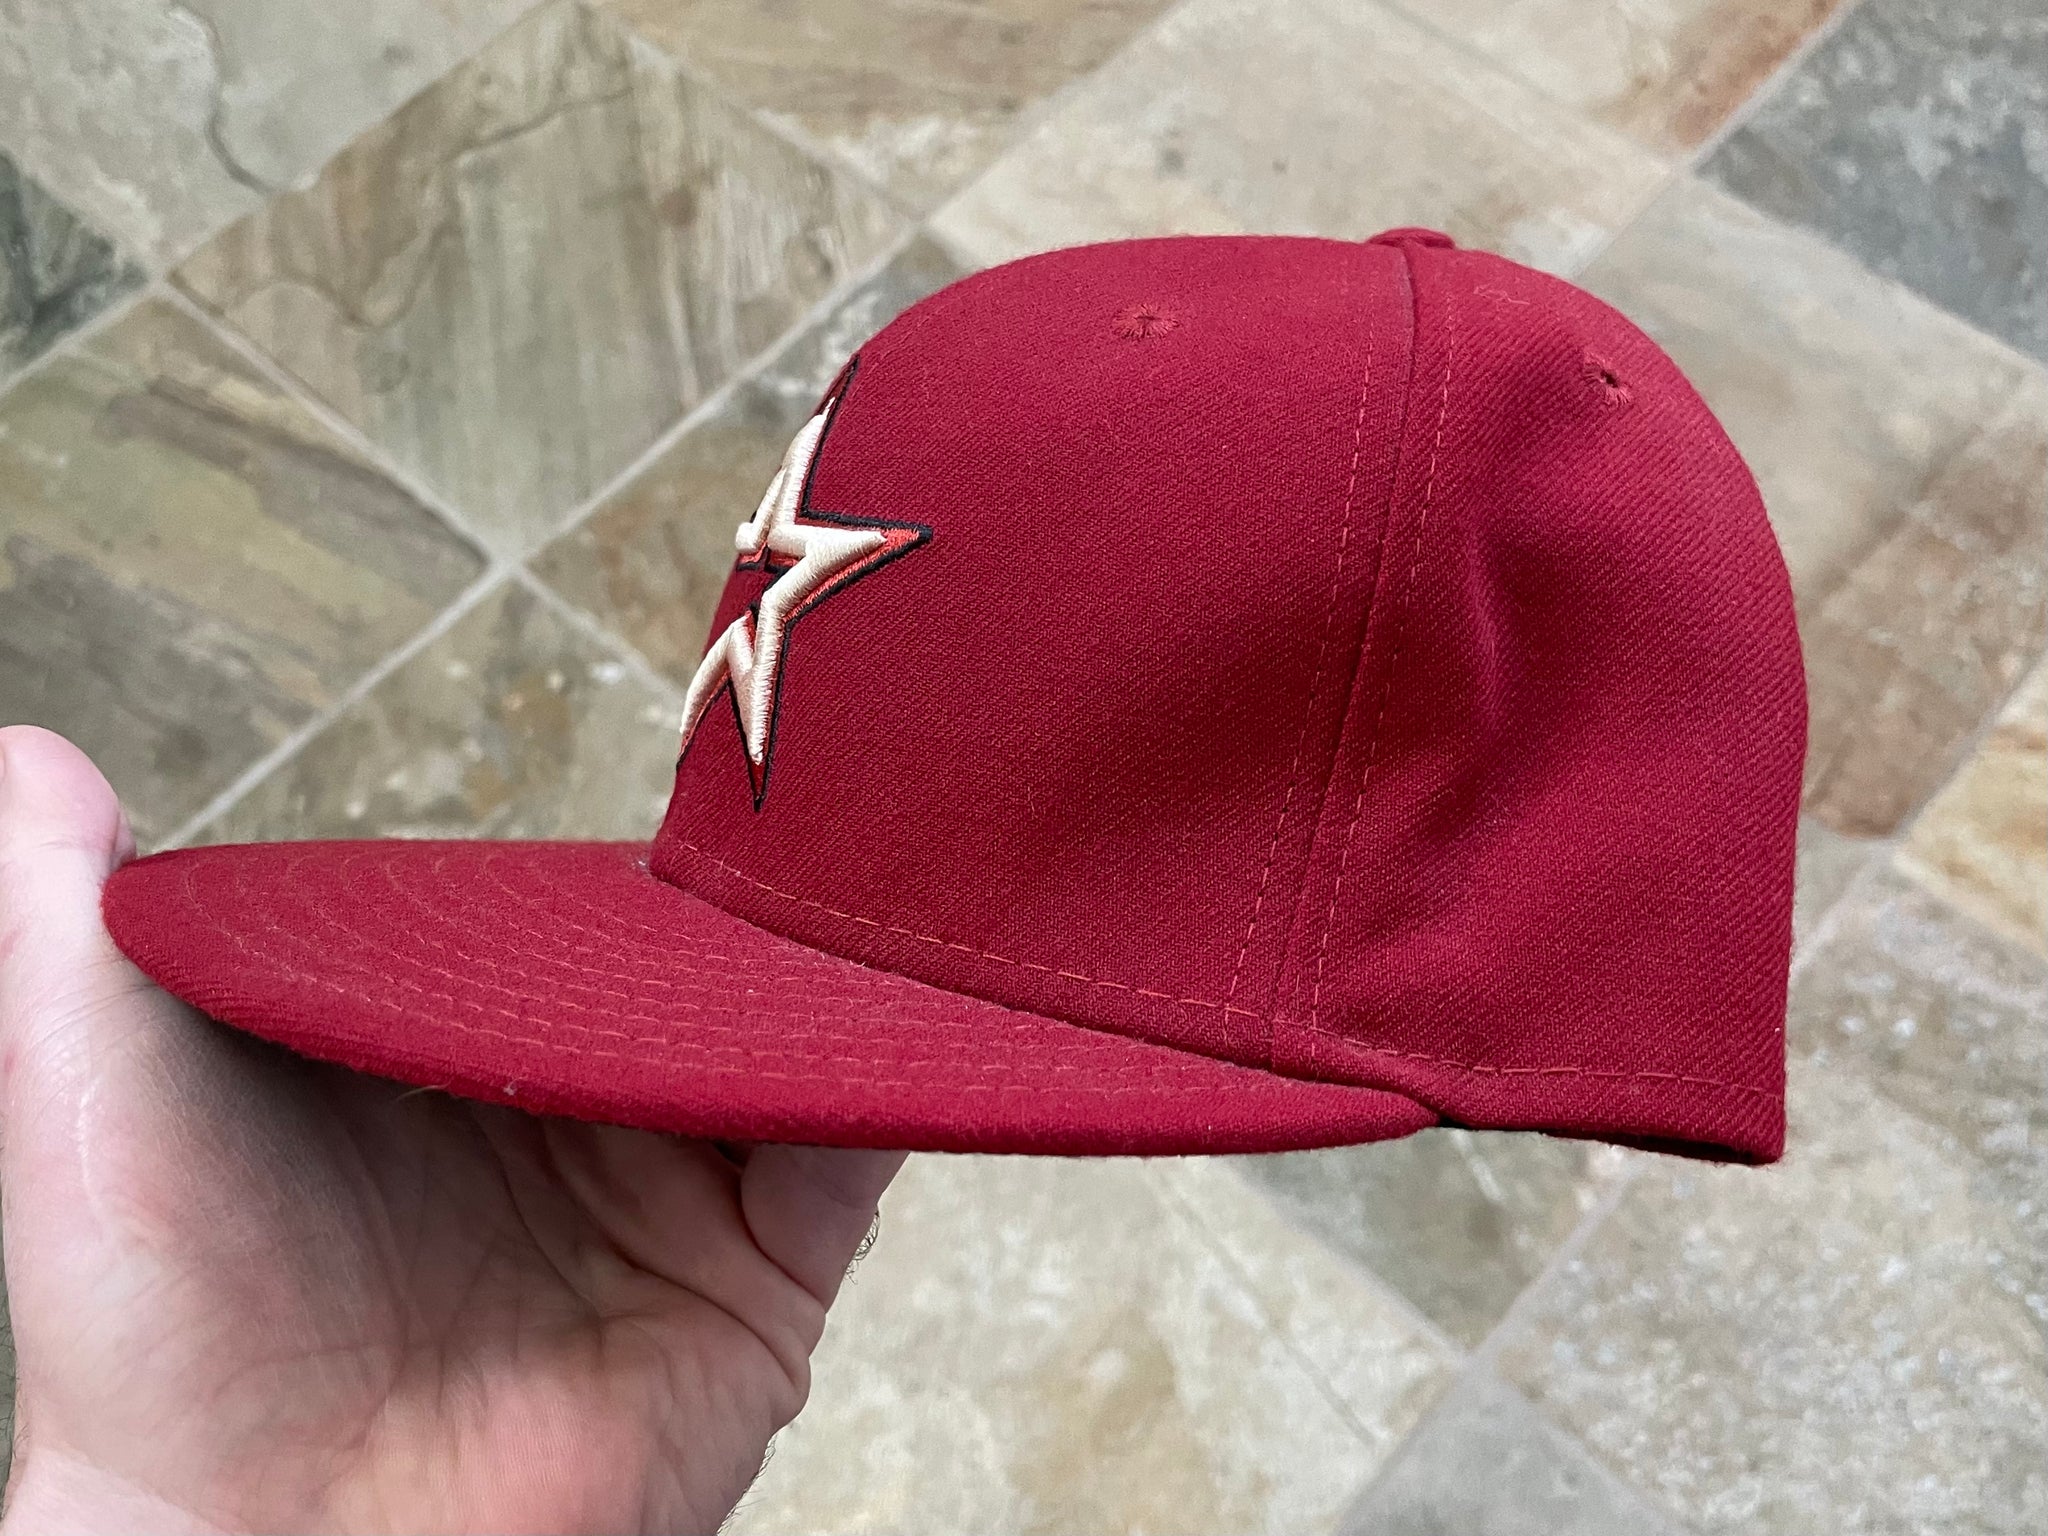 Vintage Houston Astros Hat Old Logo New Era 59Fifty Size 7 3/8 TEAM ISSUE